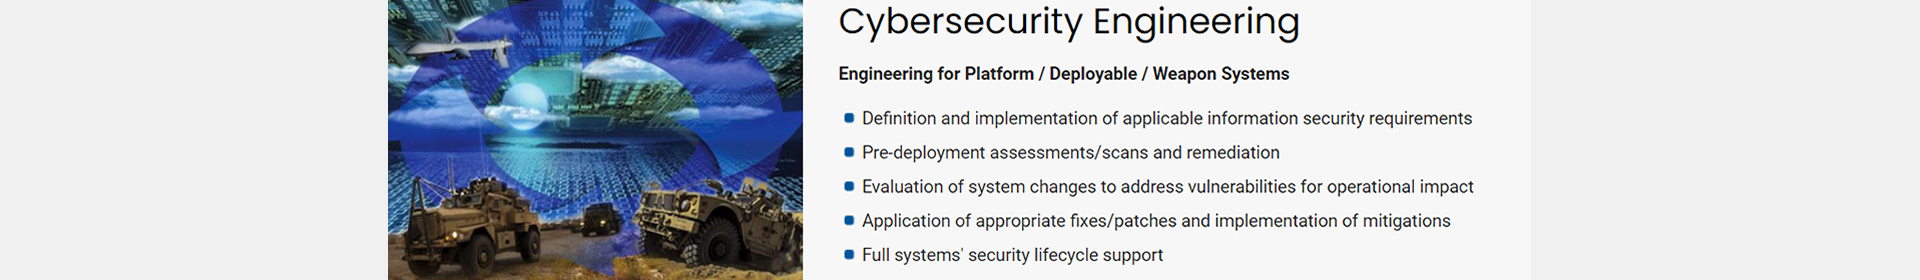 Cybersecurity Engineering